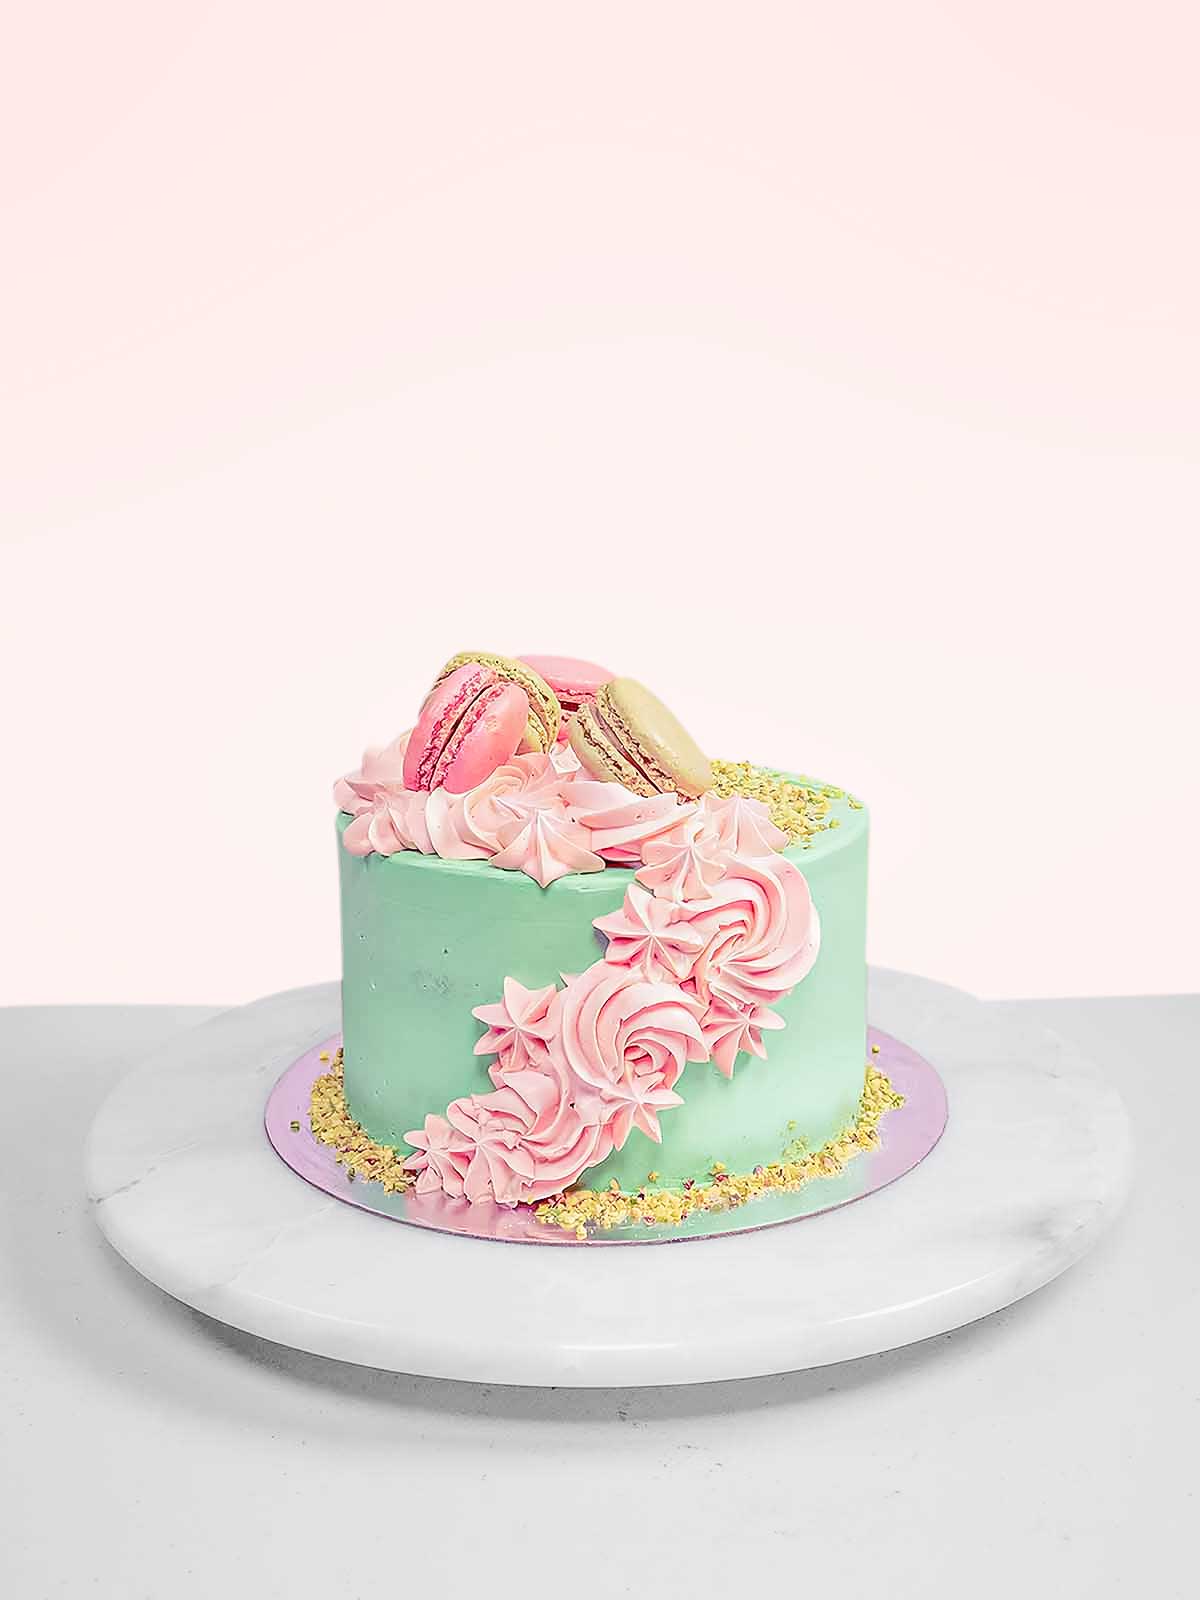 Lavish Icing Cakes - Cakes - Melbourne - Weddinghero.com.au